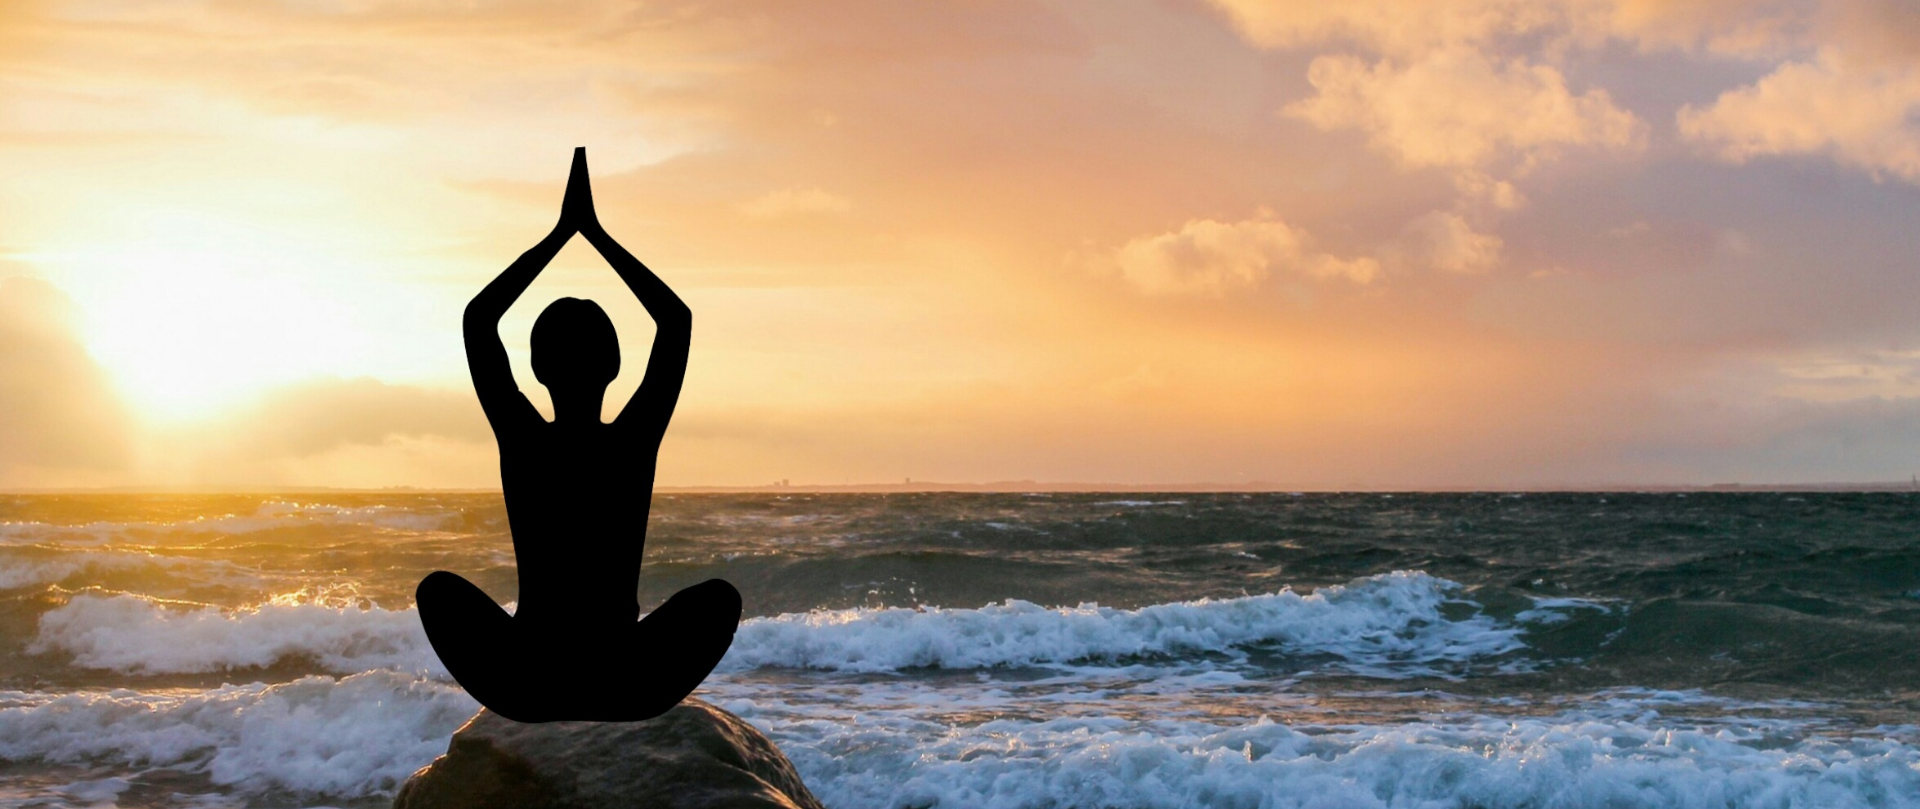 Yoga asana on a beach with beautiful sunset